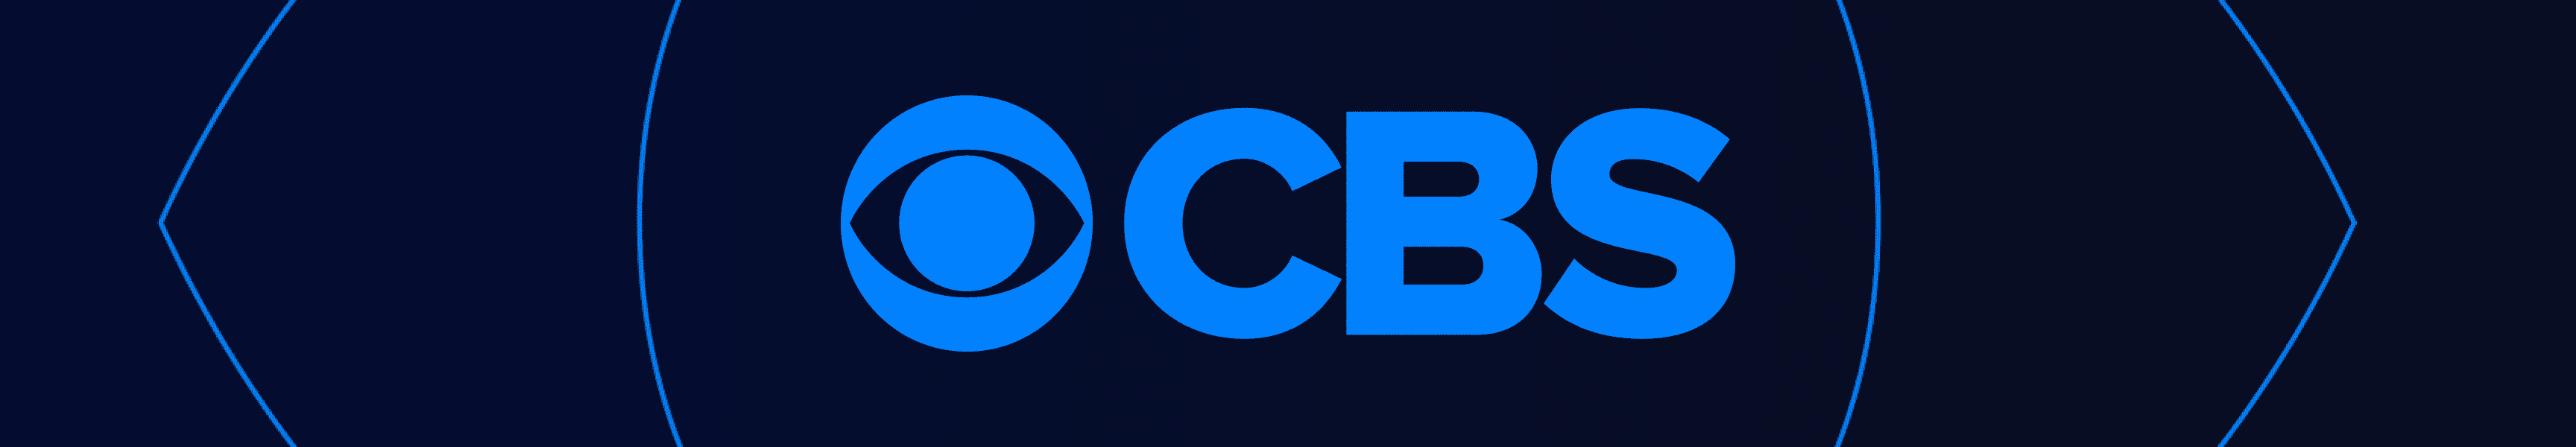 CBS Entertainment Mantas